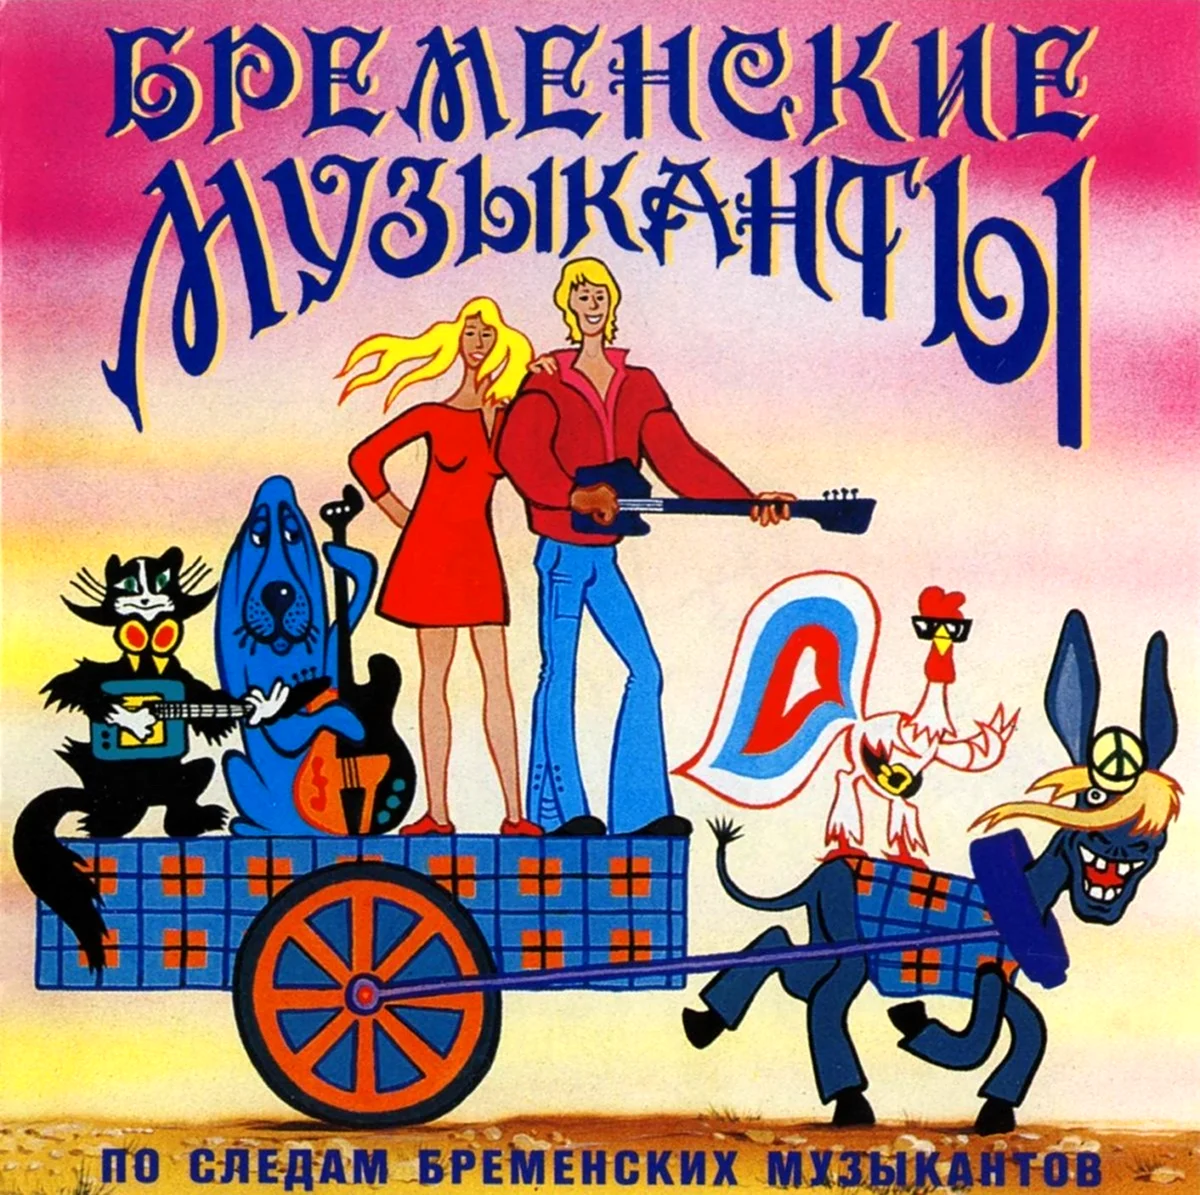 Бременские музыканты мультфильм 1969. Картинка